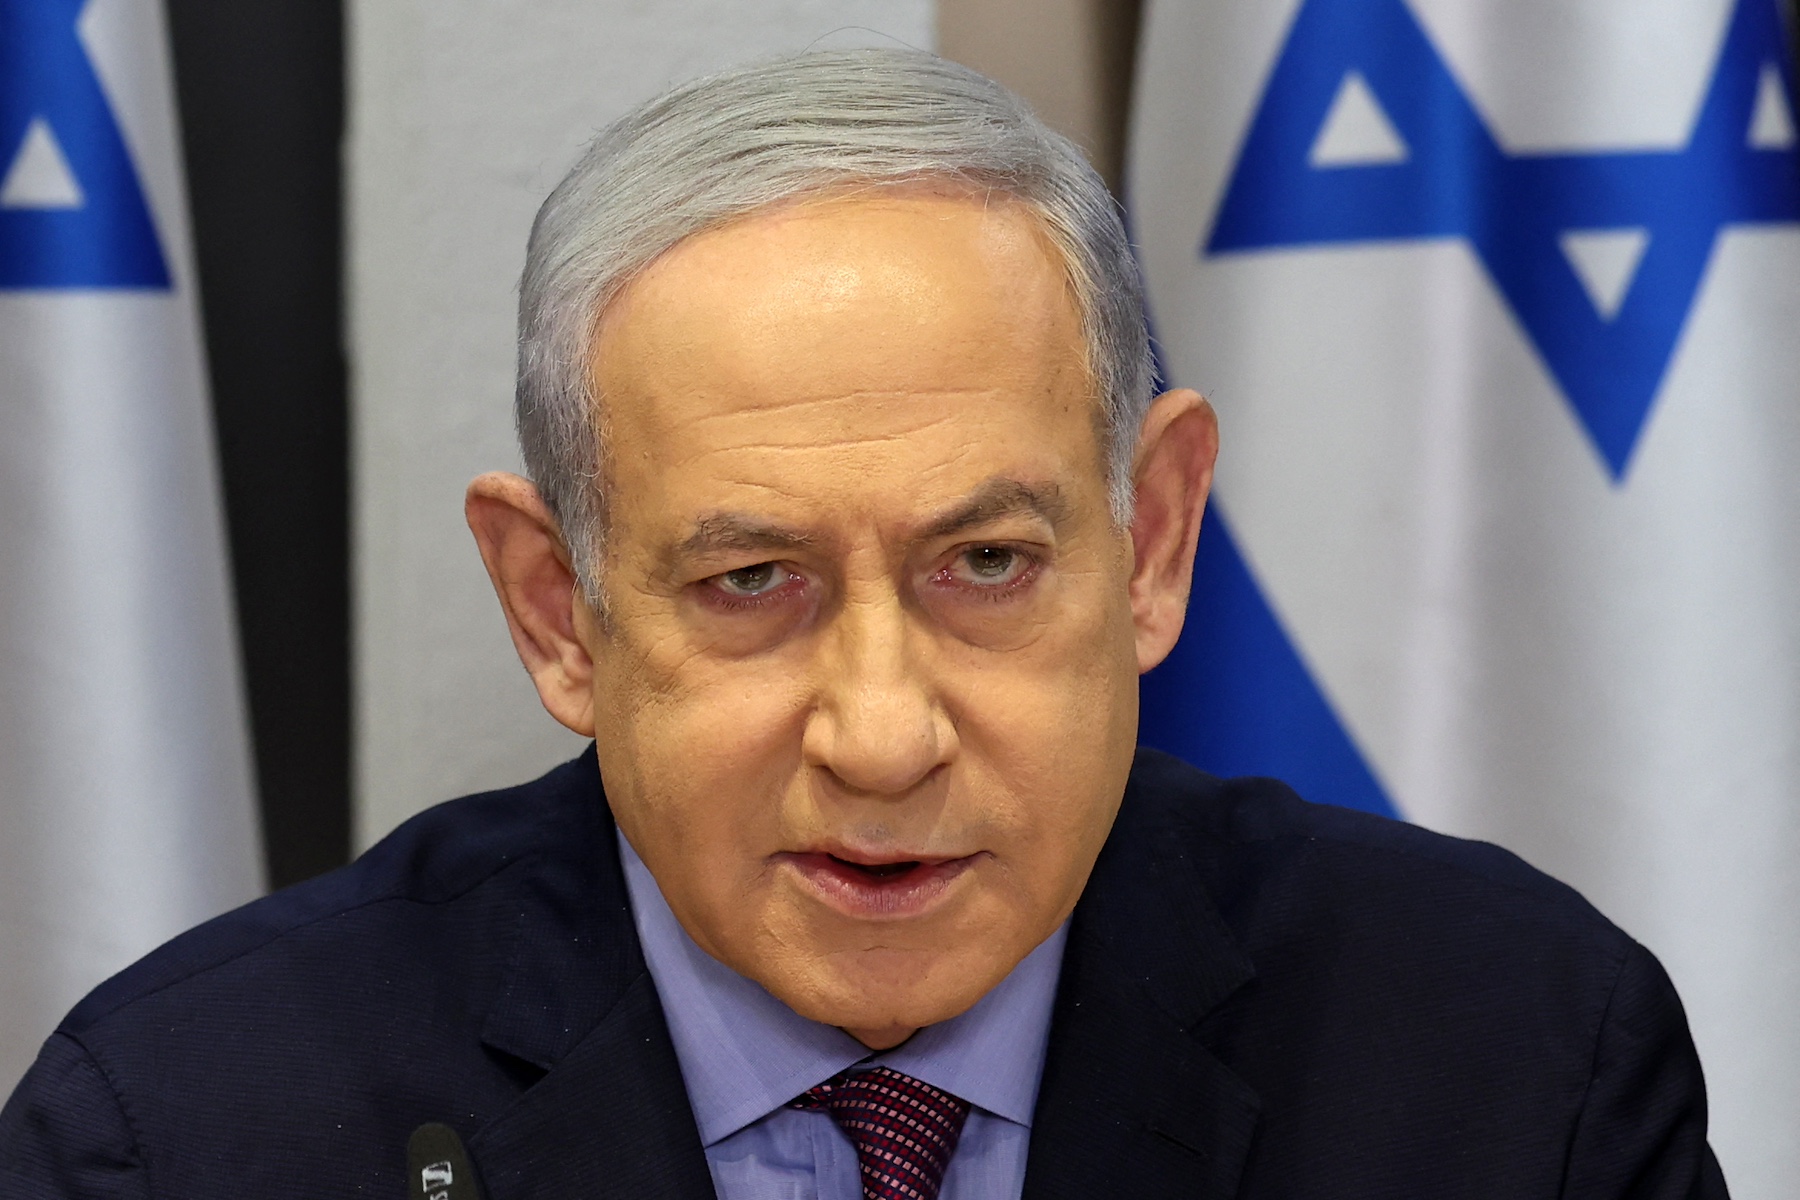 Israeli Prime Minister Netanyahu chairs Cabinet meeting